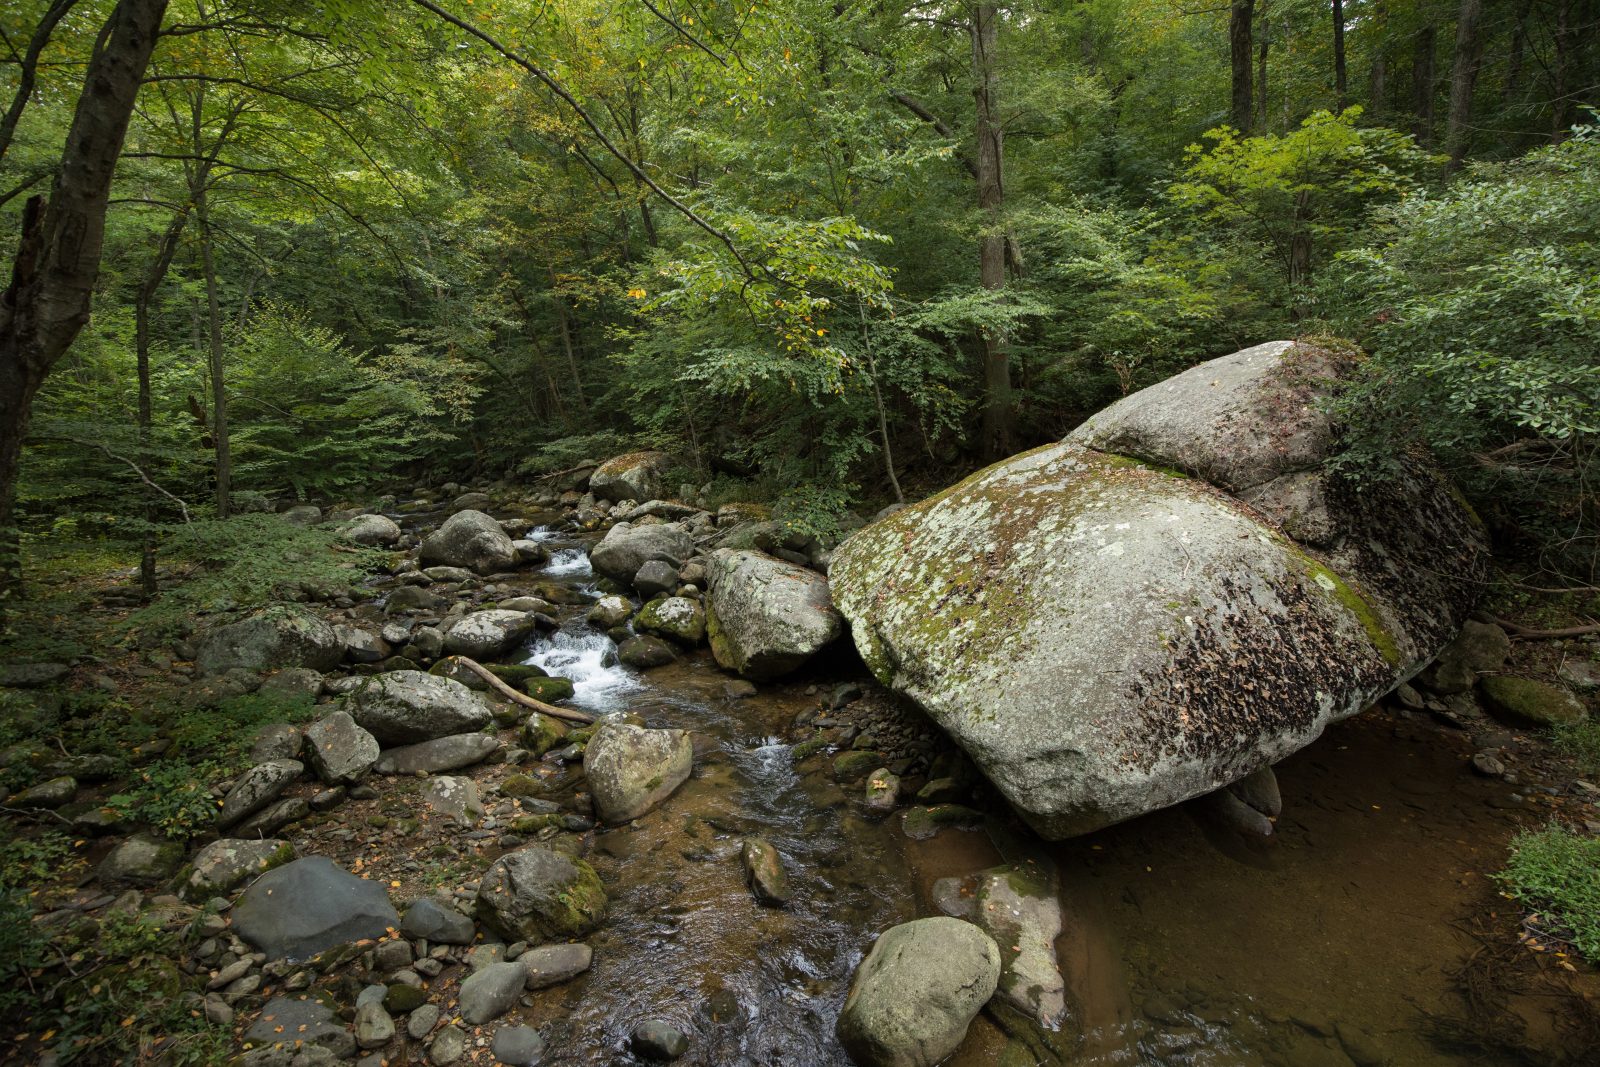 A stream running through medium to large rocks